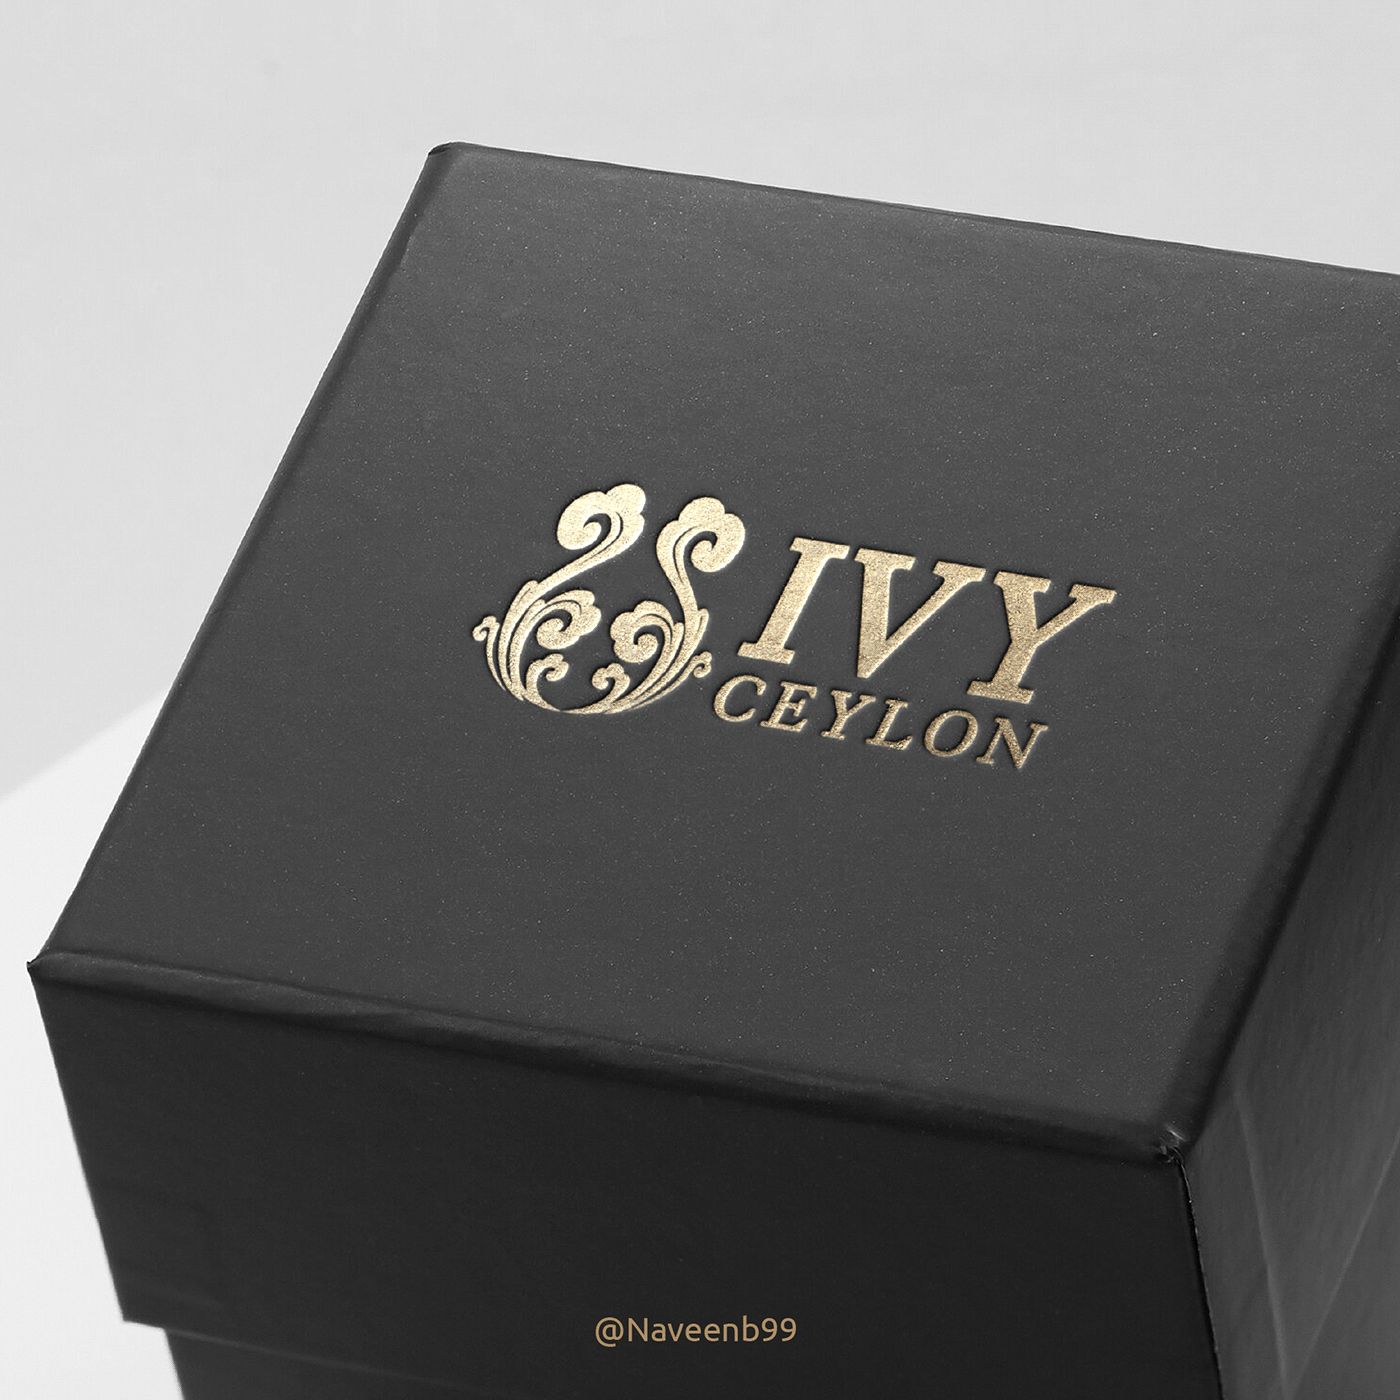 jewelry branding  logo Fashion  art srilanka Ceylon Gems brands ivyceylon